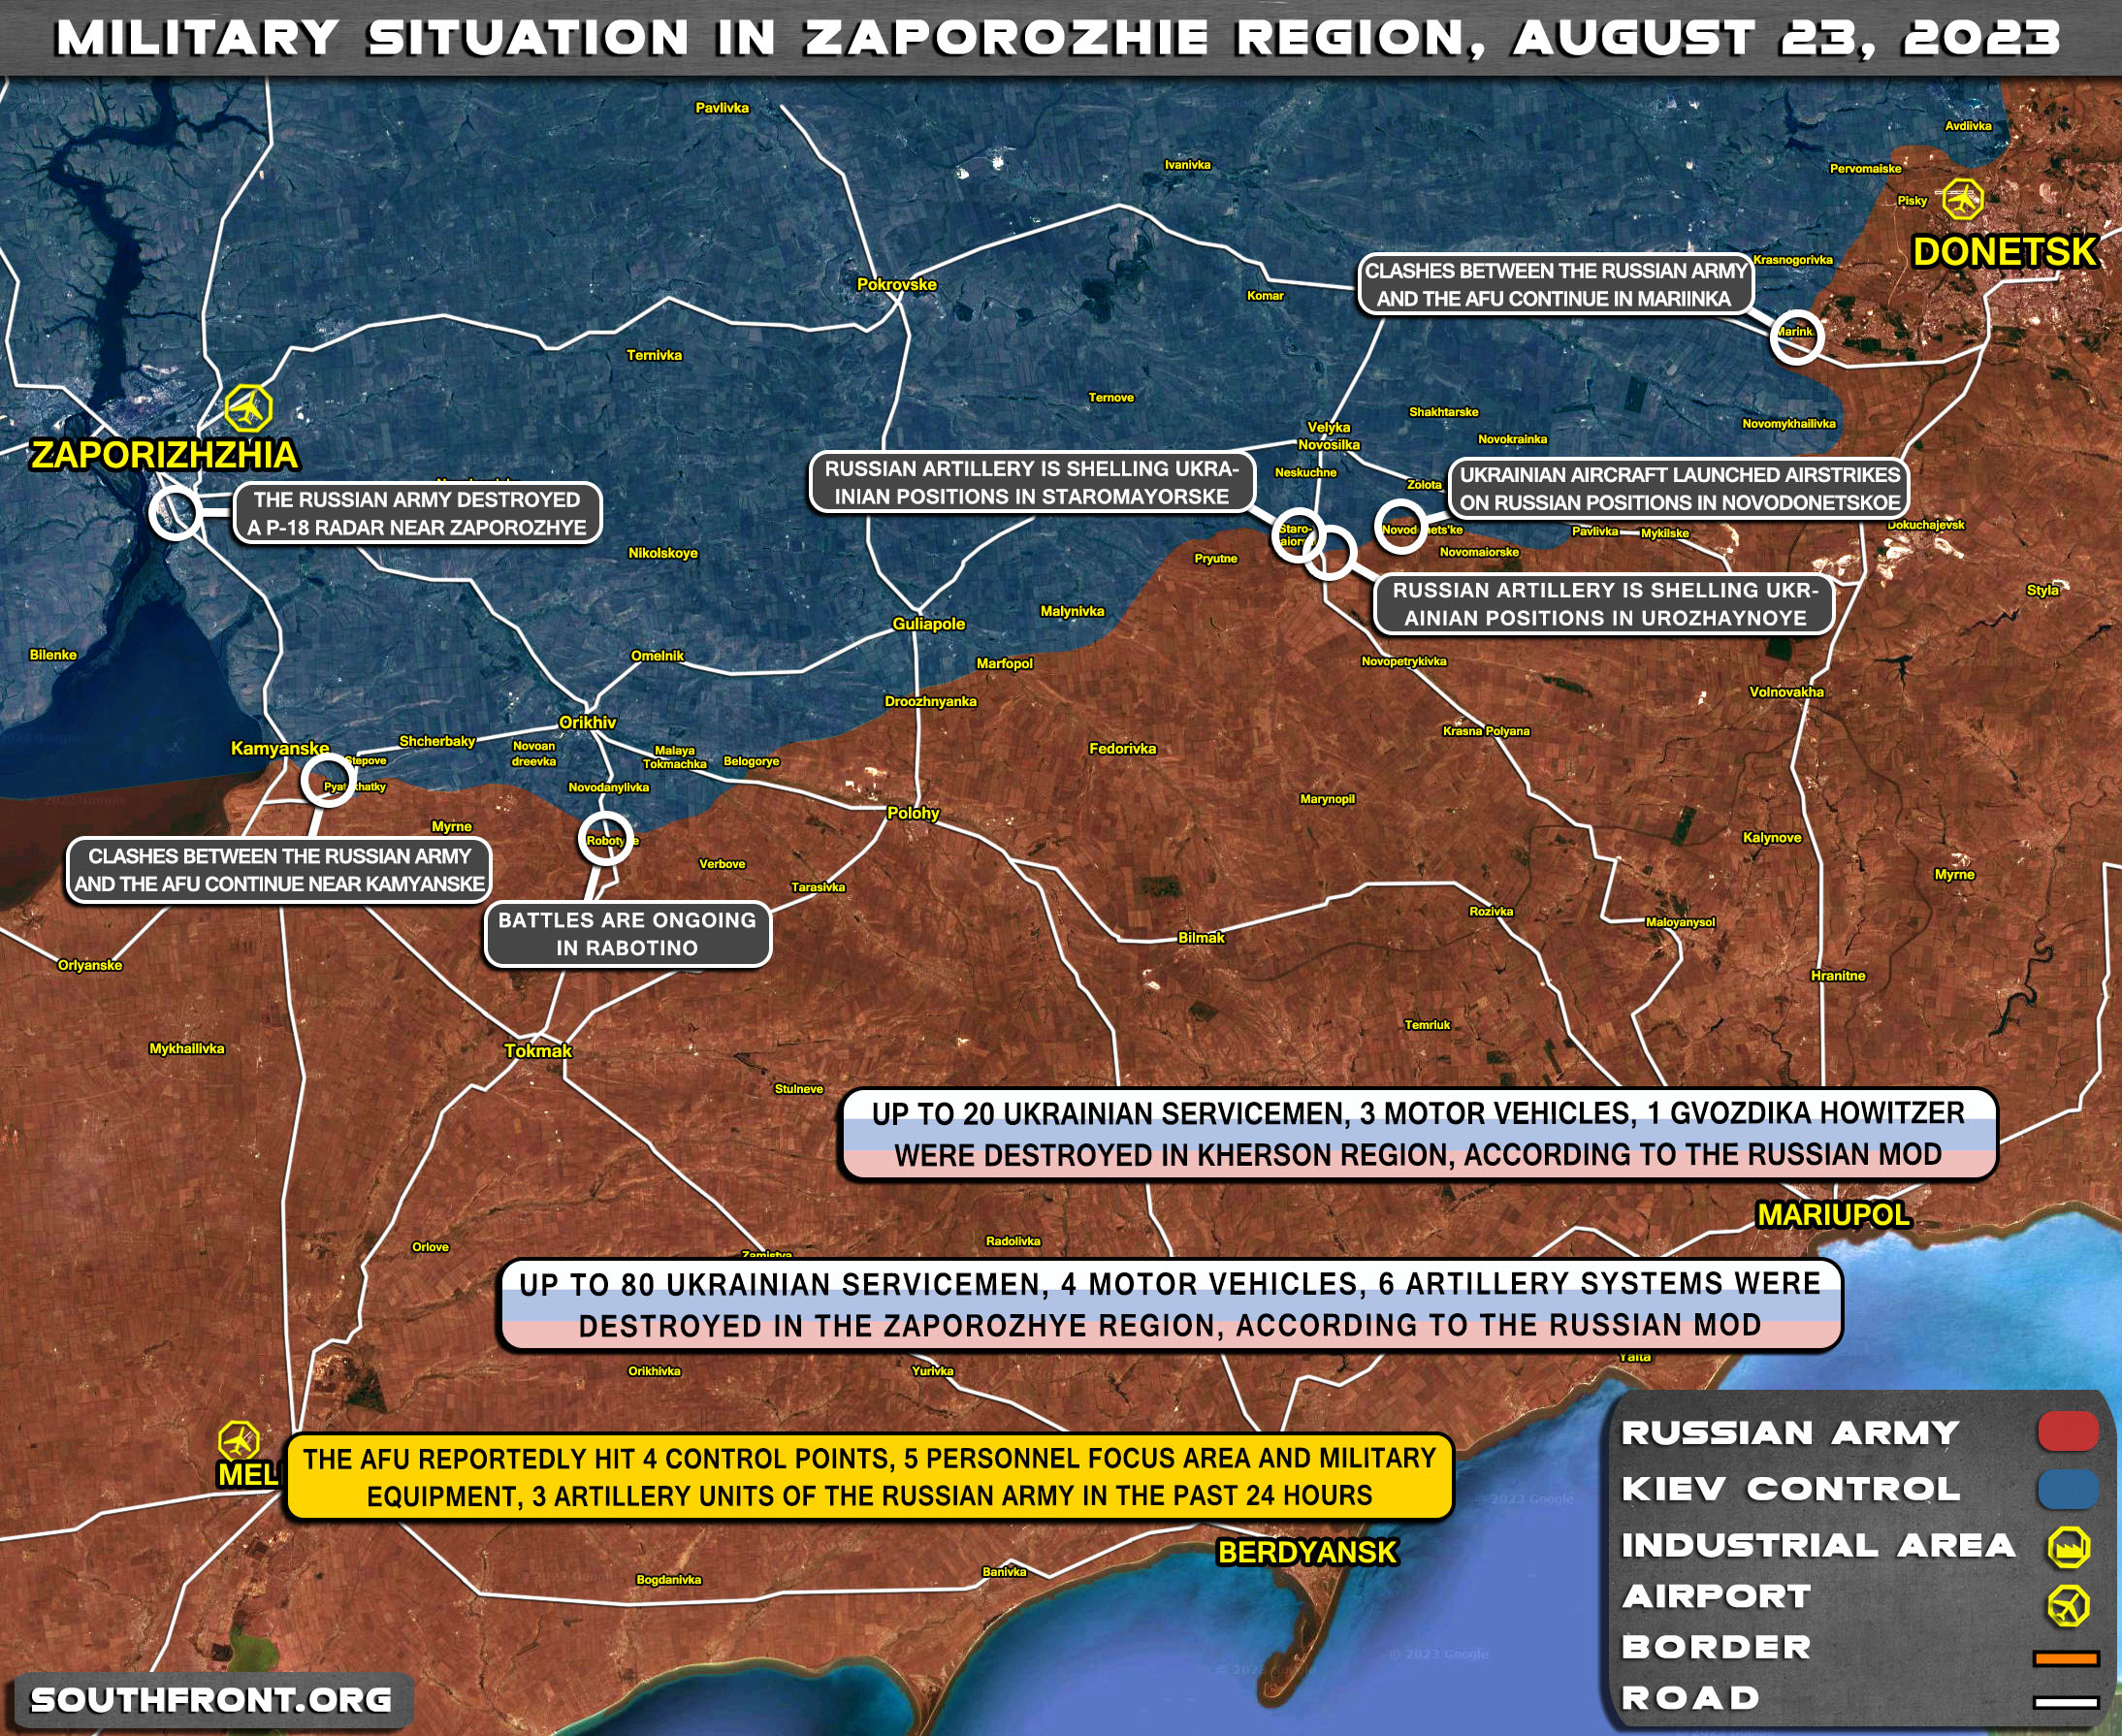 23august2023_Ukraine_Zaporizhzhia_map.jpg